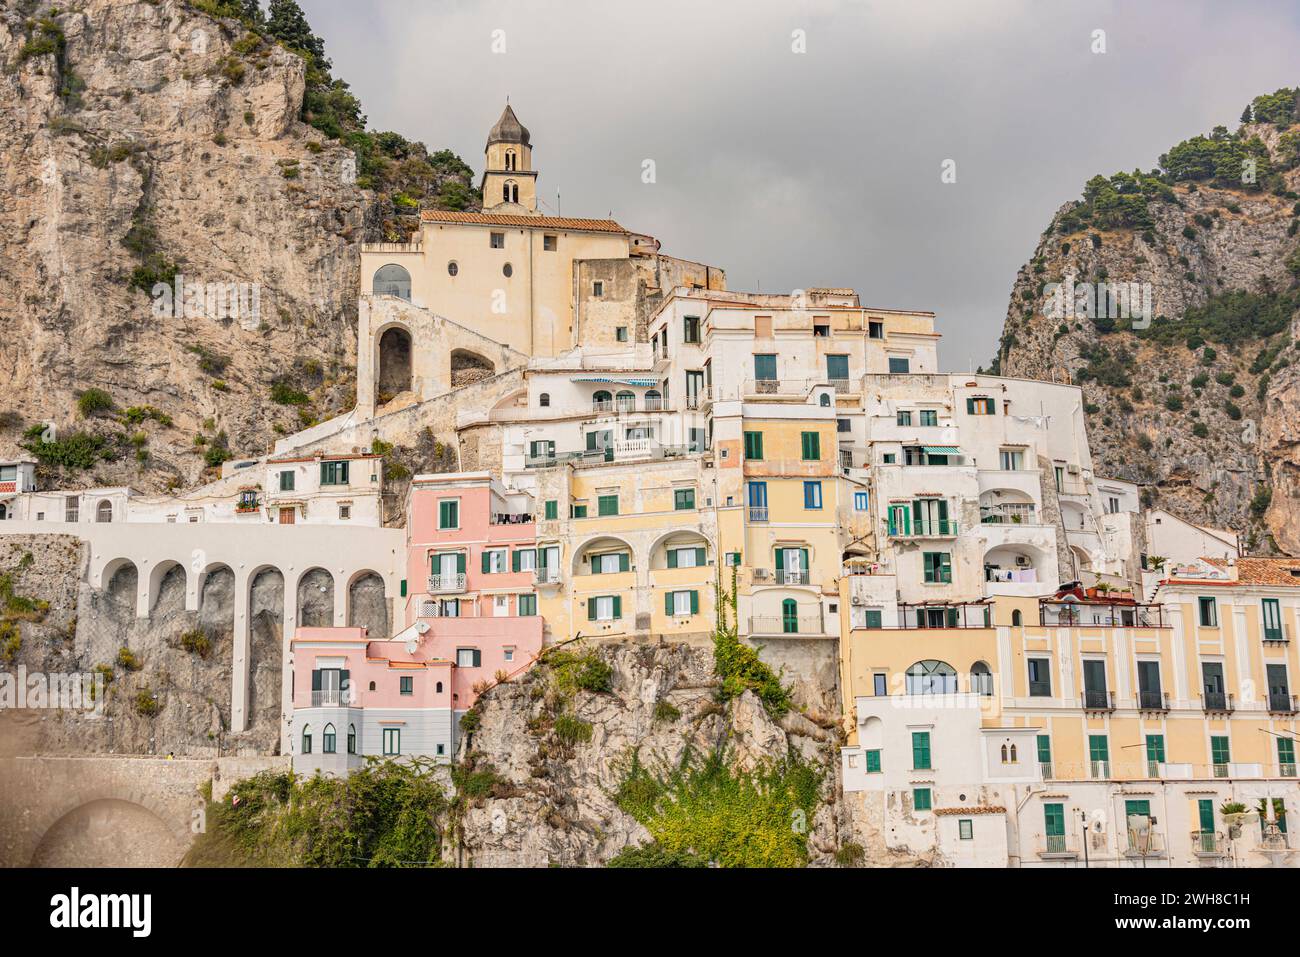 Leaving Positano for Amalfi by boat on the Amalfi coast, Campagnia, Italy Stock Photo